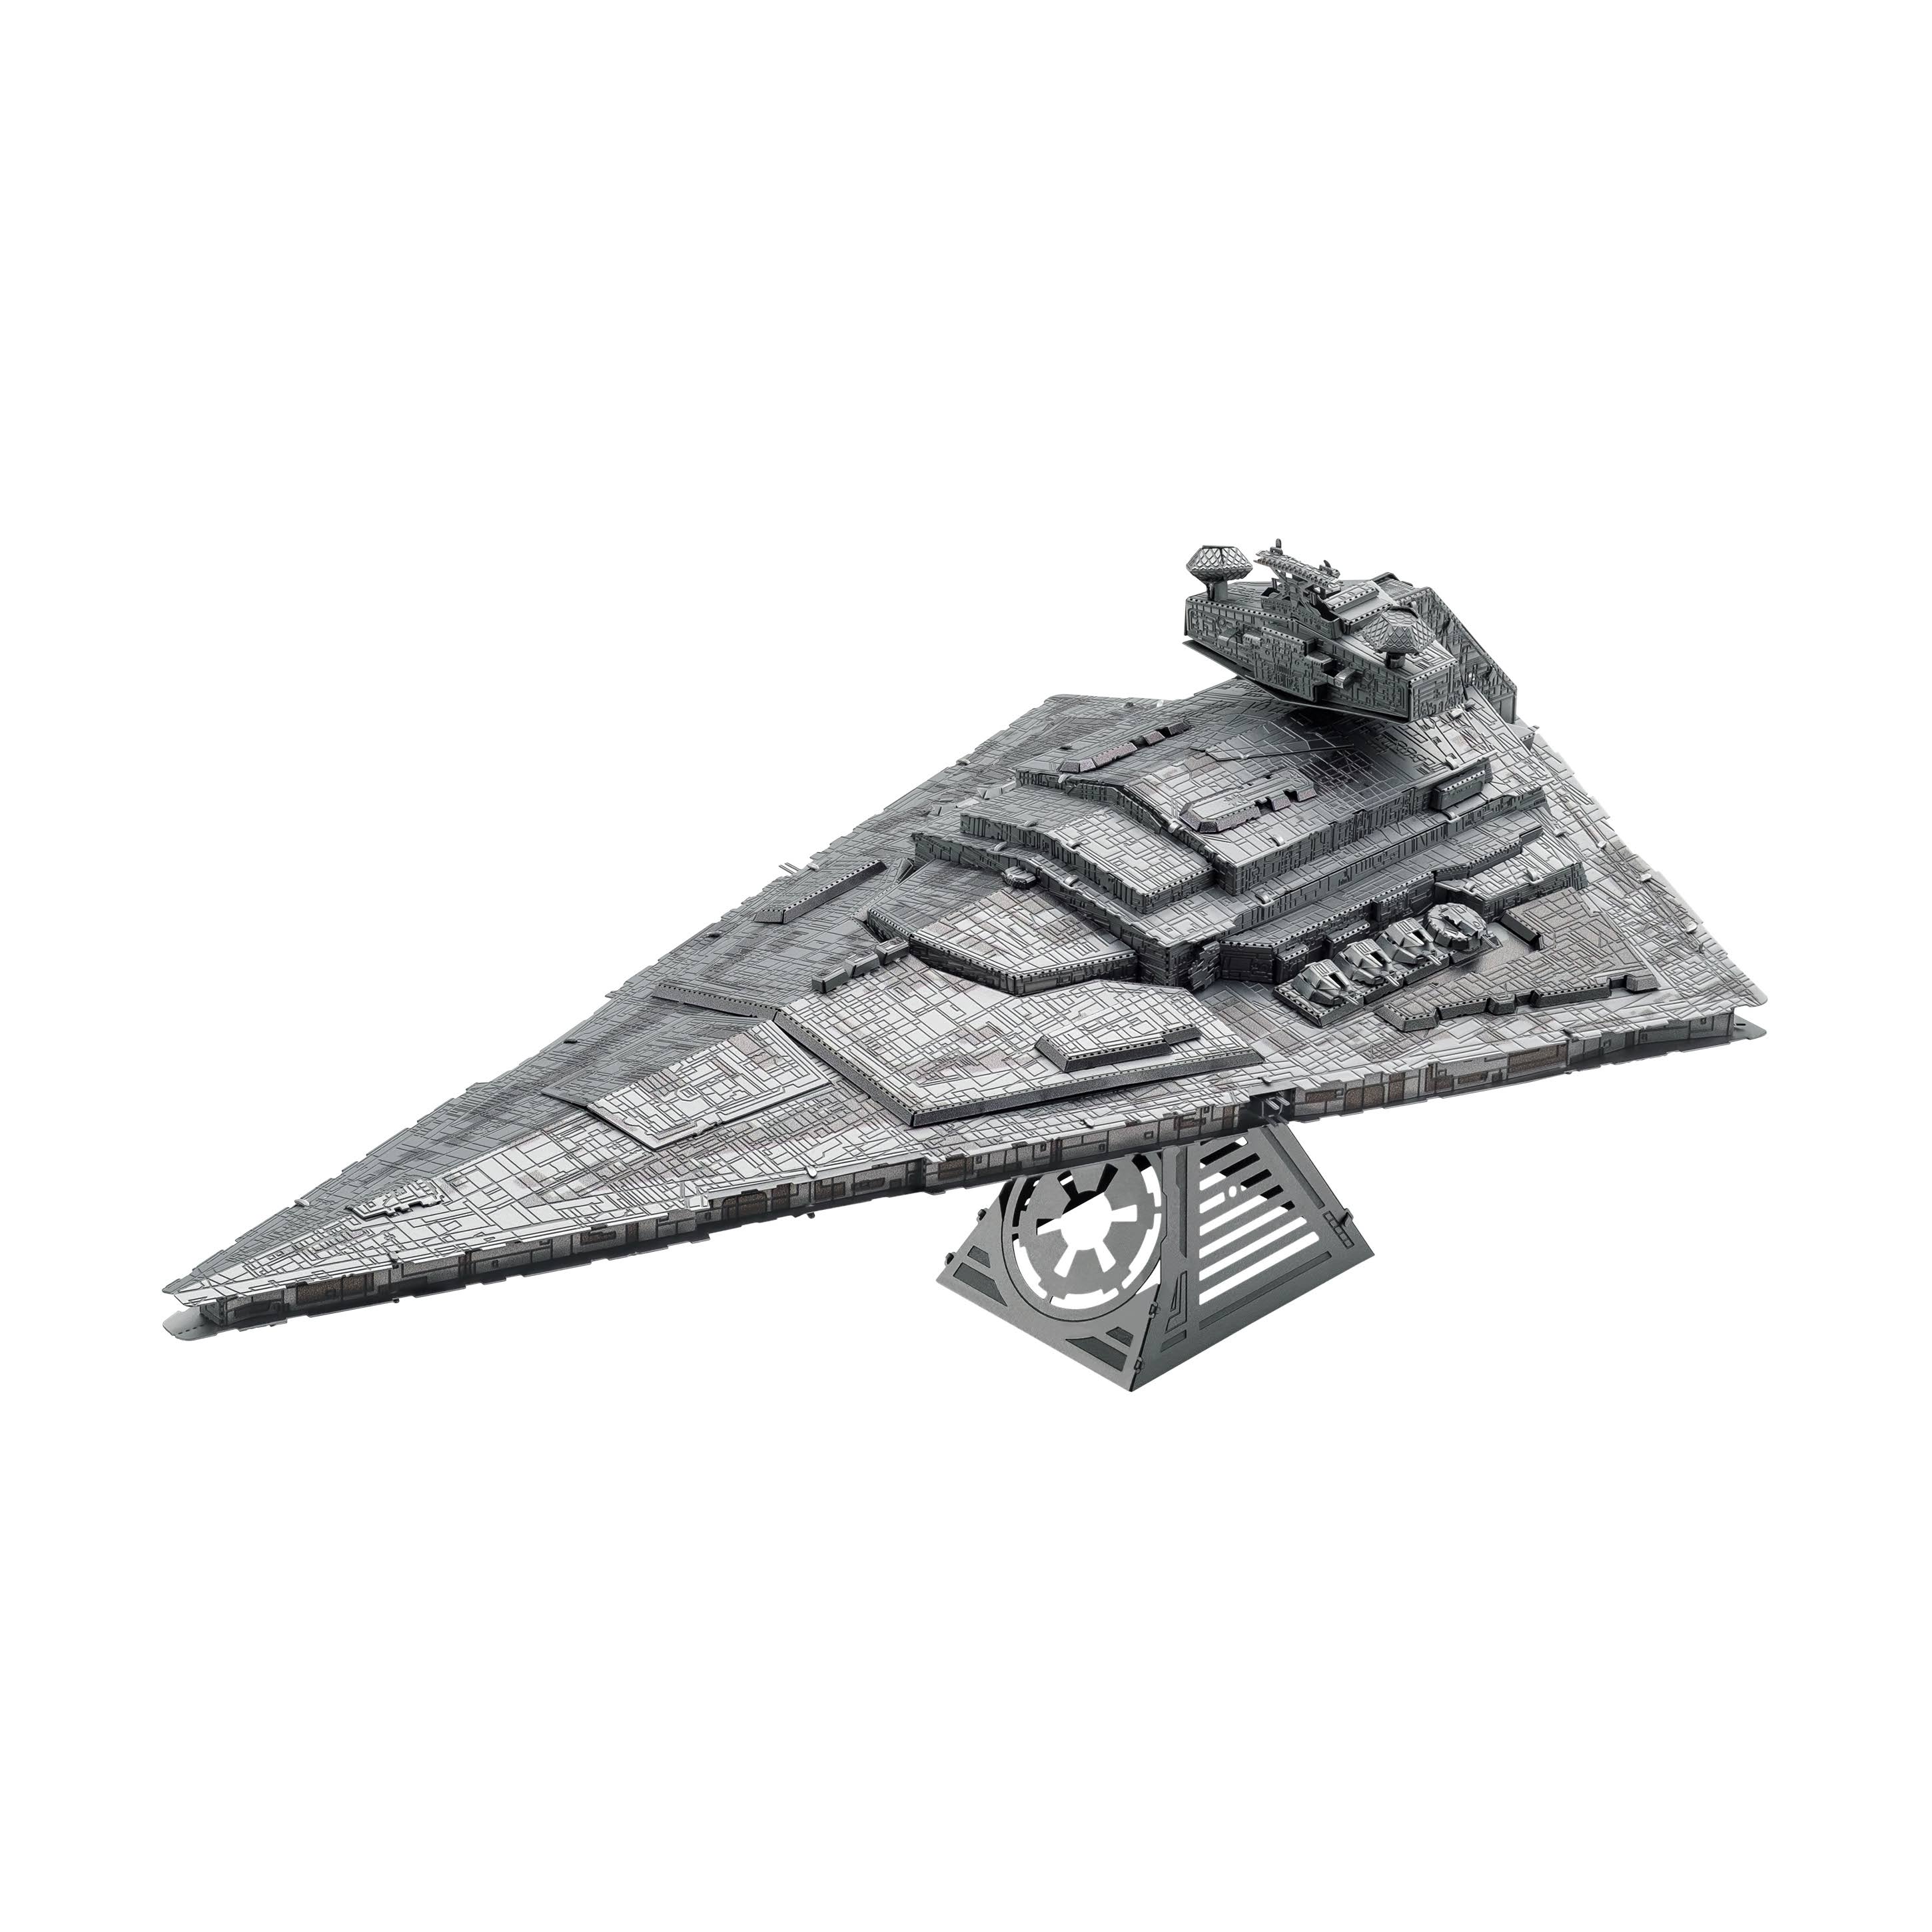 Metal Earth Star Wars ICONX Star Destroyer 3D Model Kit + Tweezers 14167